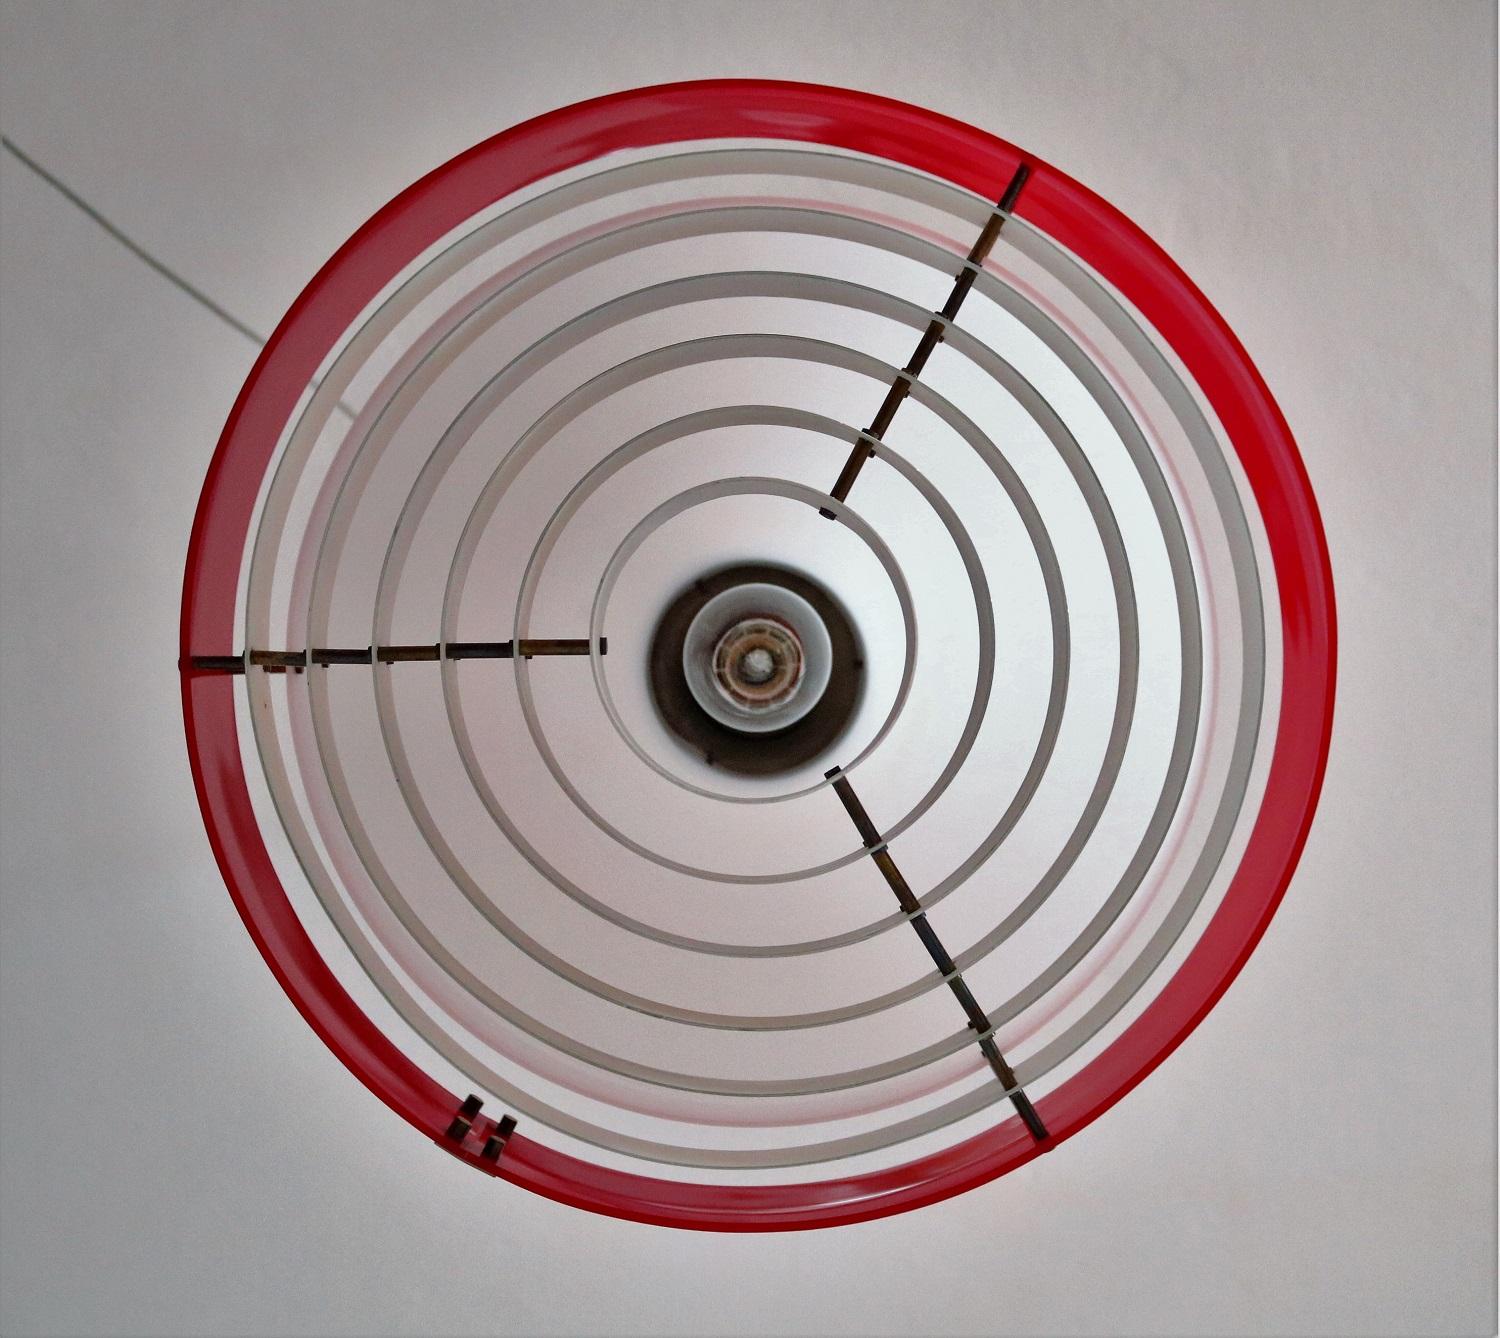 Italian Midcentury Pendant Lamp in Acrylic Aluminium and Brass by Stilnovo 1950s For Sale 2